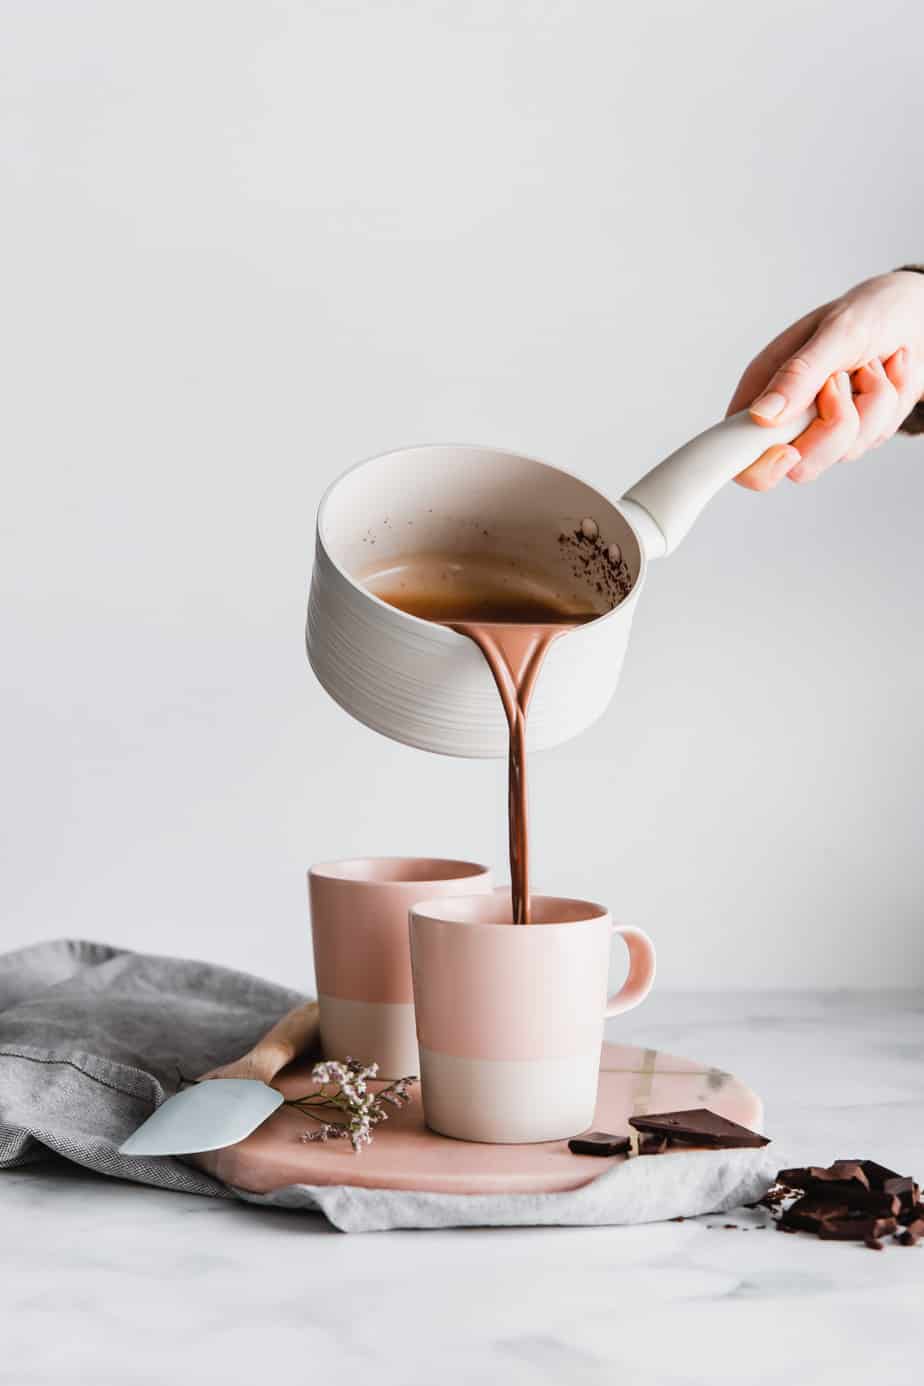 A small saucepan pouring hot chocolate into mugs.